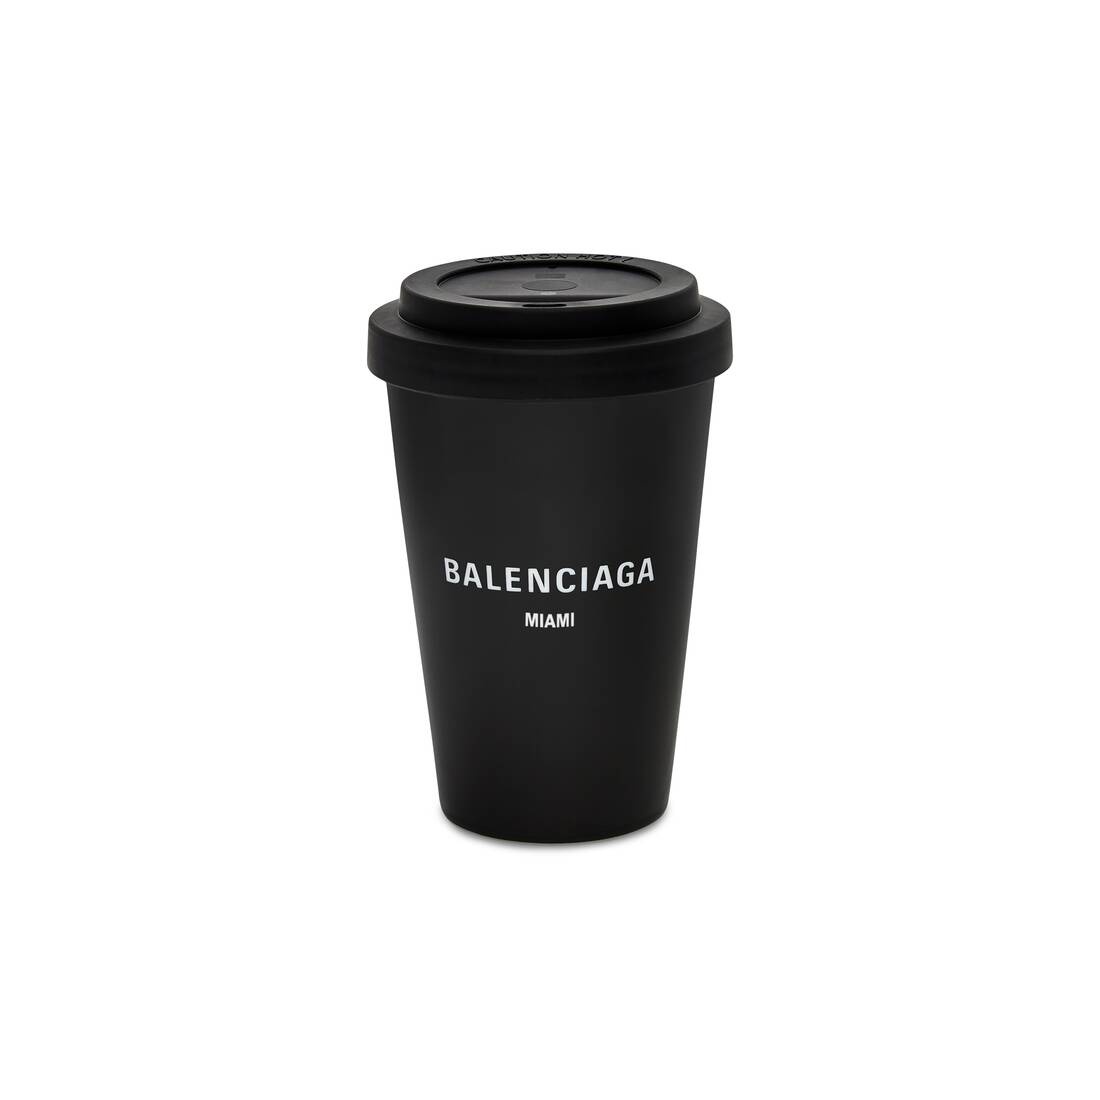 Miami Coffee Cup in Black - 1